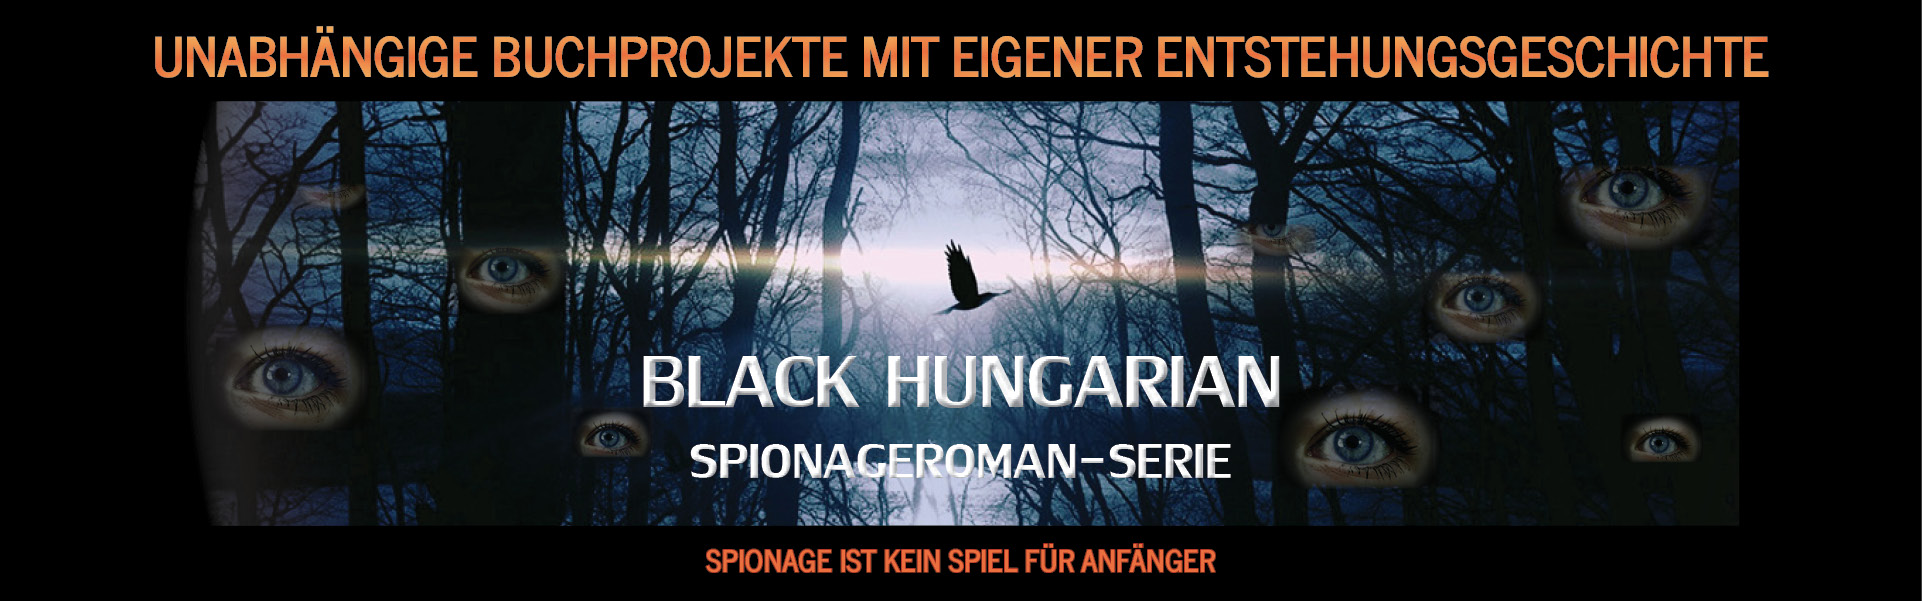 Spionageroman Serie Projekt Black Hungarian